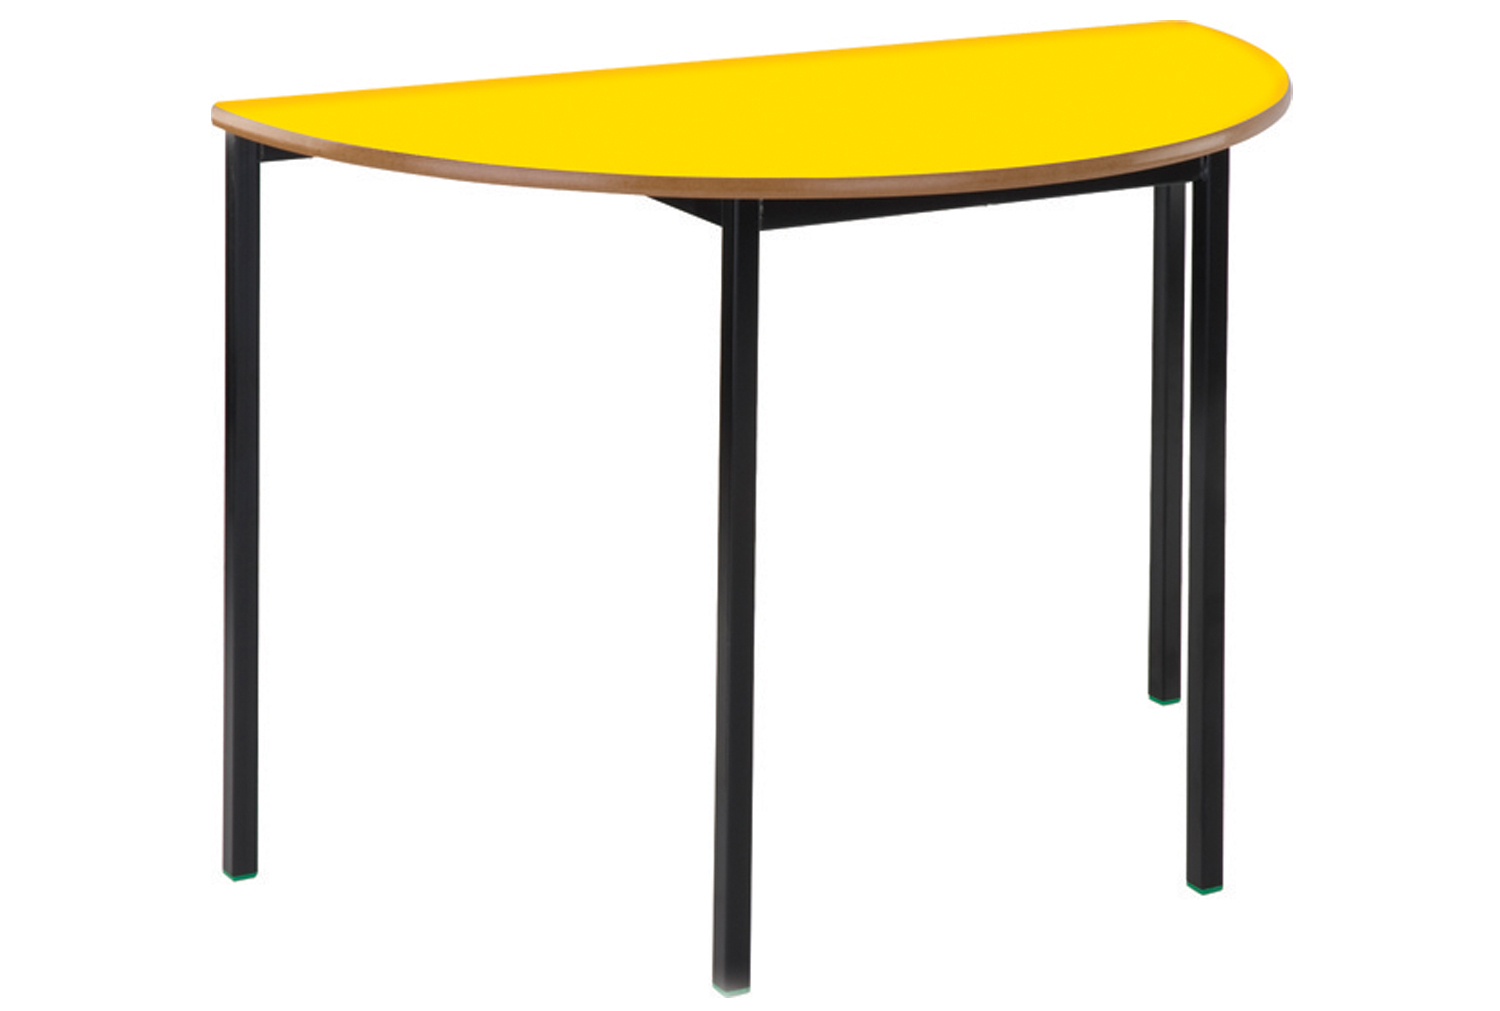 Qty 4 - Semi-Circular Fully Welded Classroom Tables 6-8 Years, 110diax59h (cm), Black Frame, Oak Top, PU Charcoal Edge